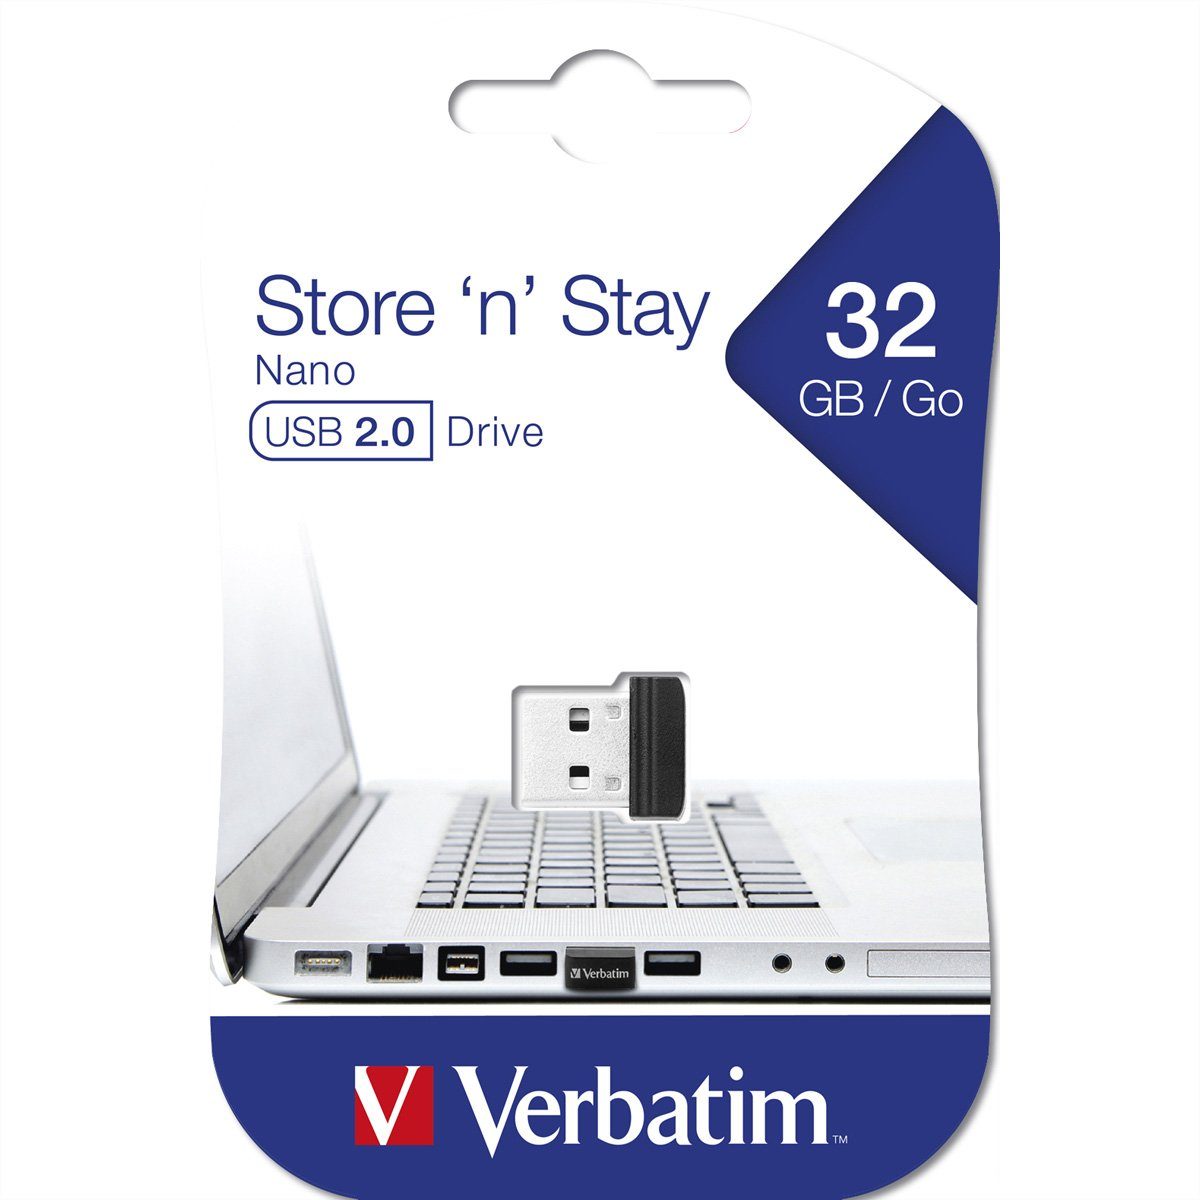 Verbatim VERBATIM FD 032GB Verbatim Store 'n' Stay NANO USB-Stick